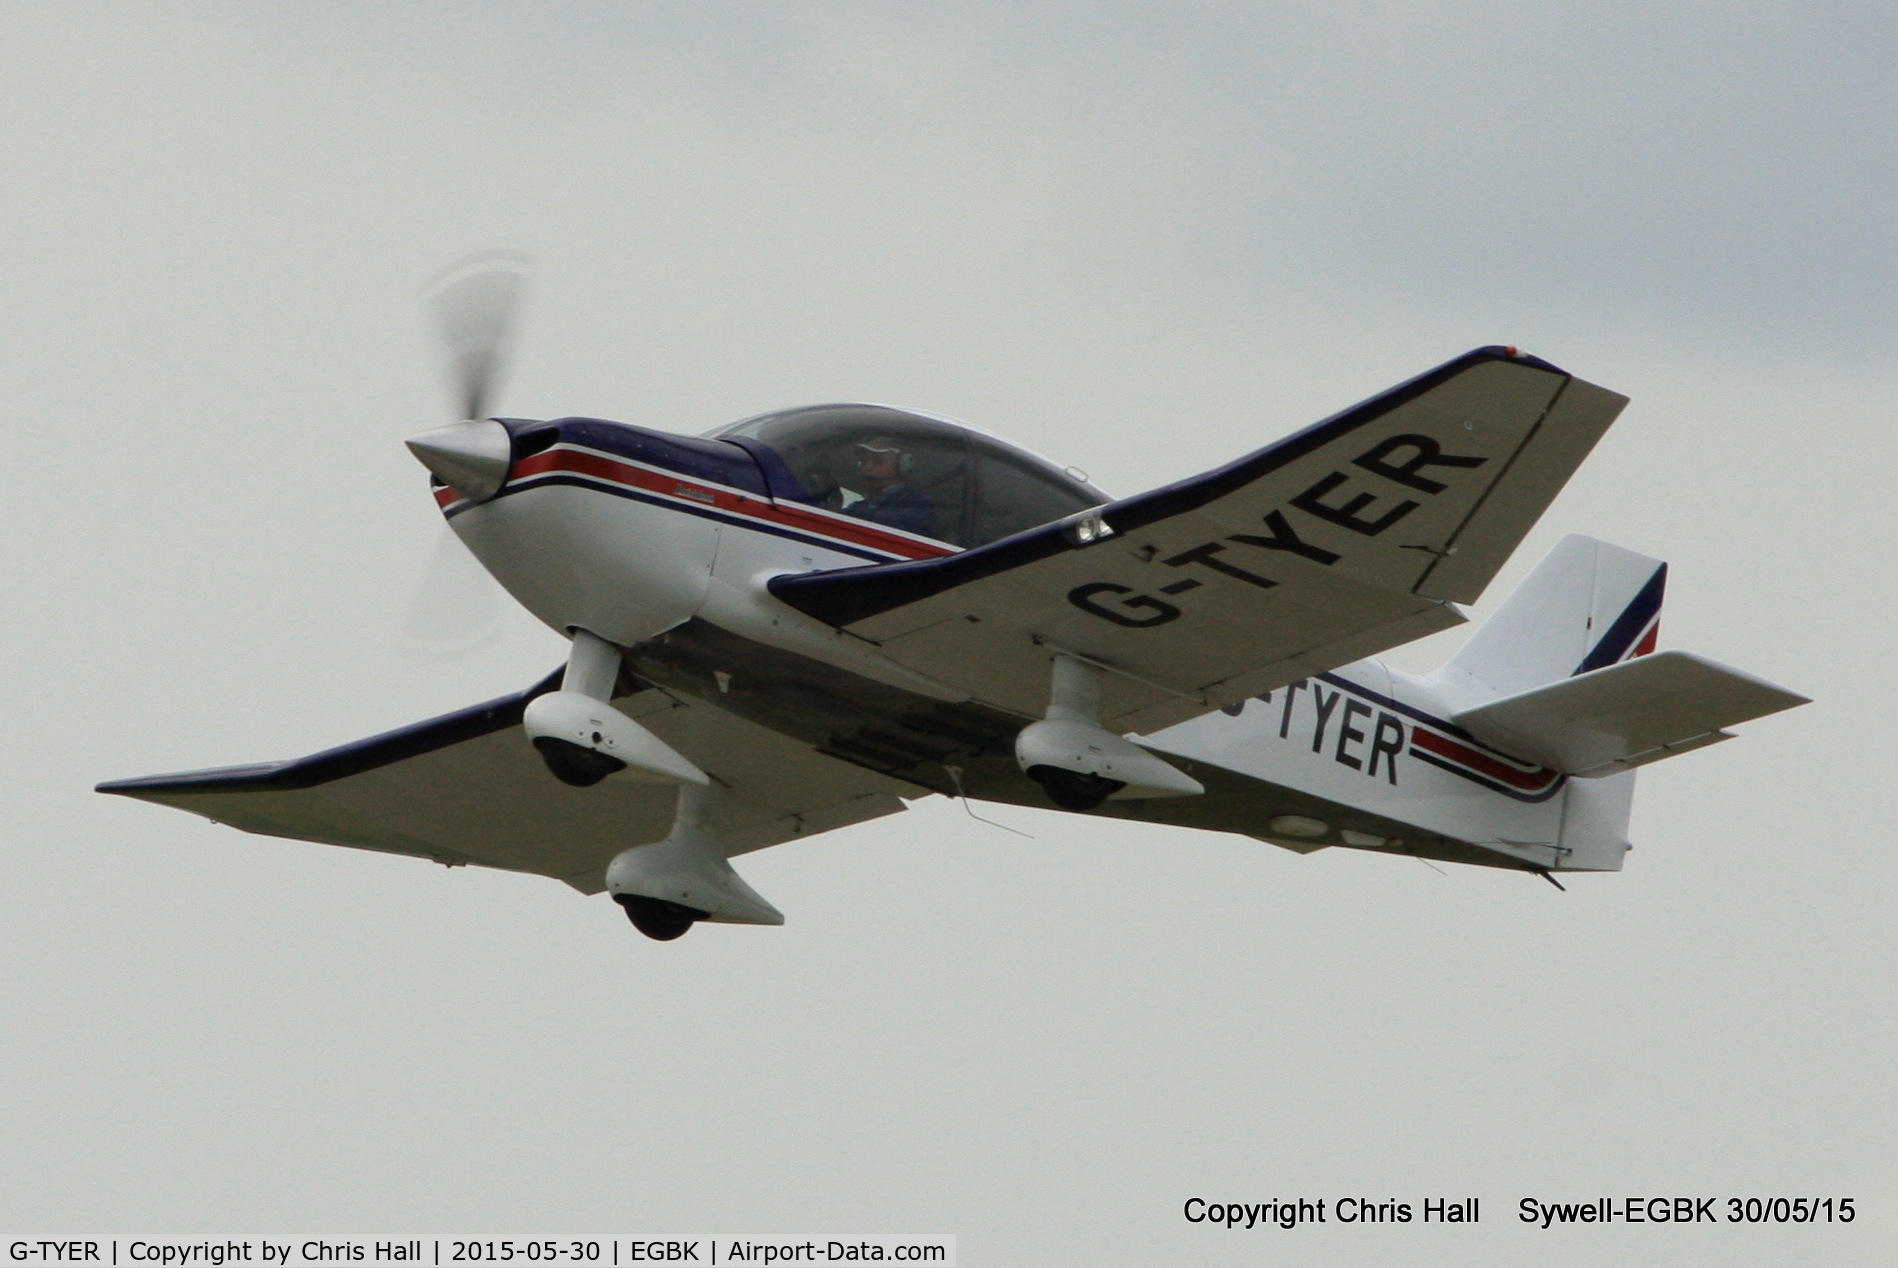 G-TYER, 2000 Robin DR-400-500 President C/N 21, at Aeroexpo 2015